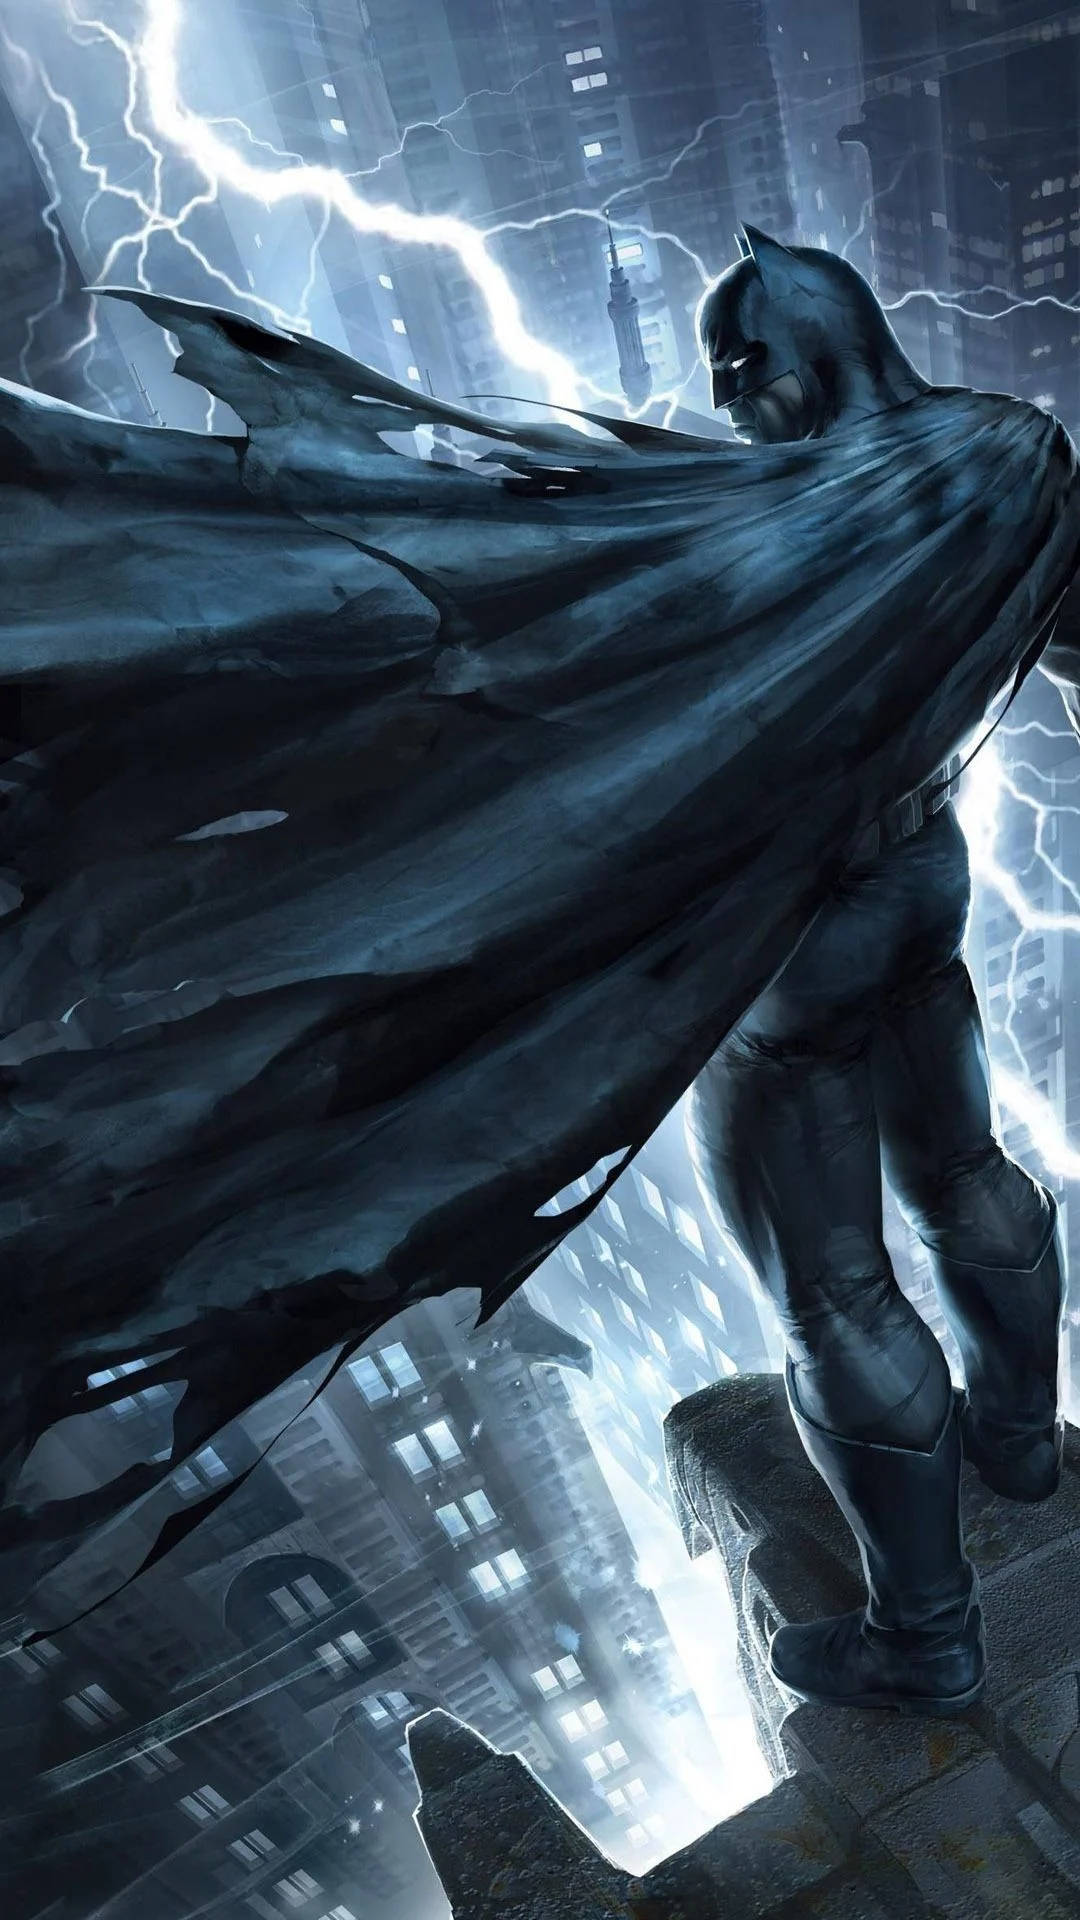 Batman In Action On Rooftops - Arkham City Iphone Wallpaper